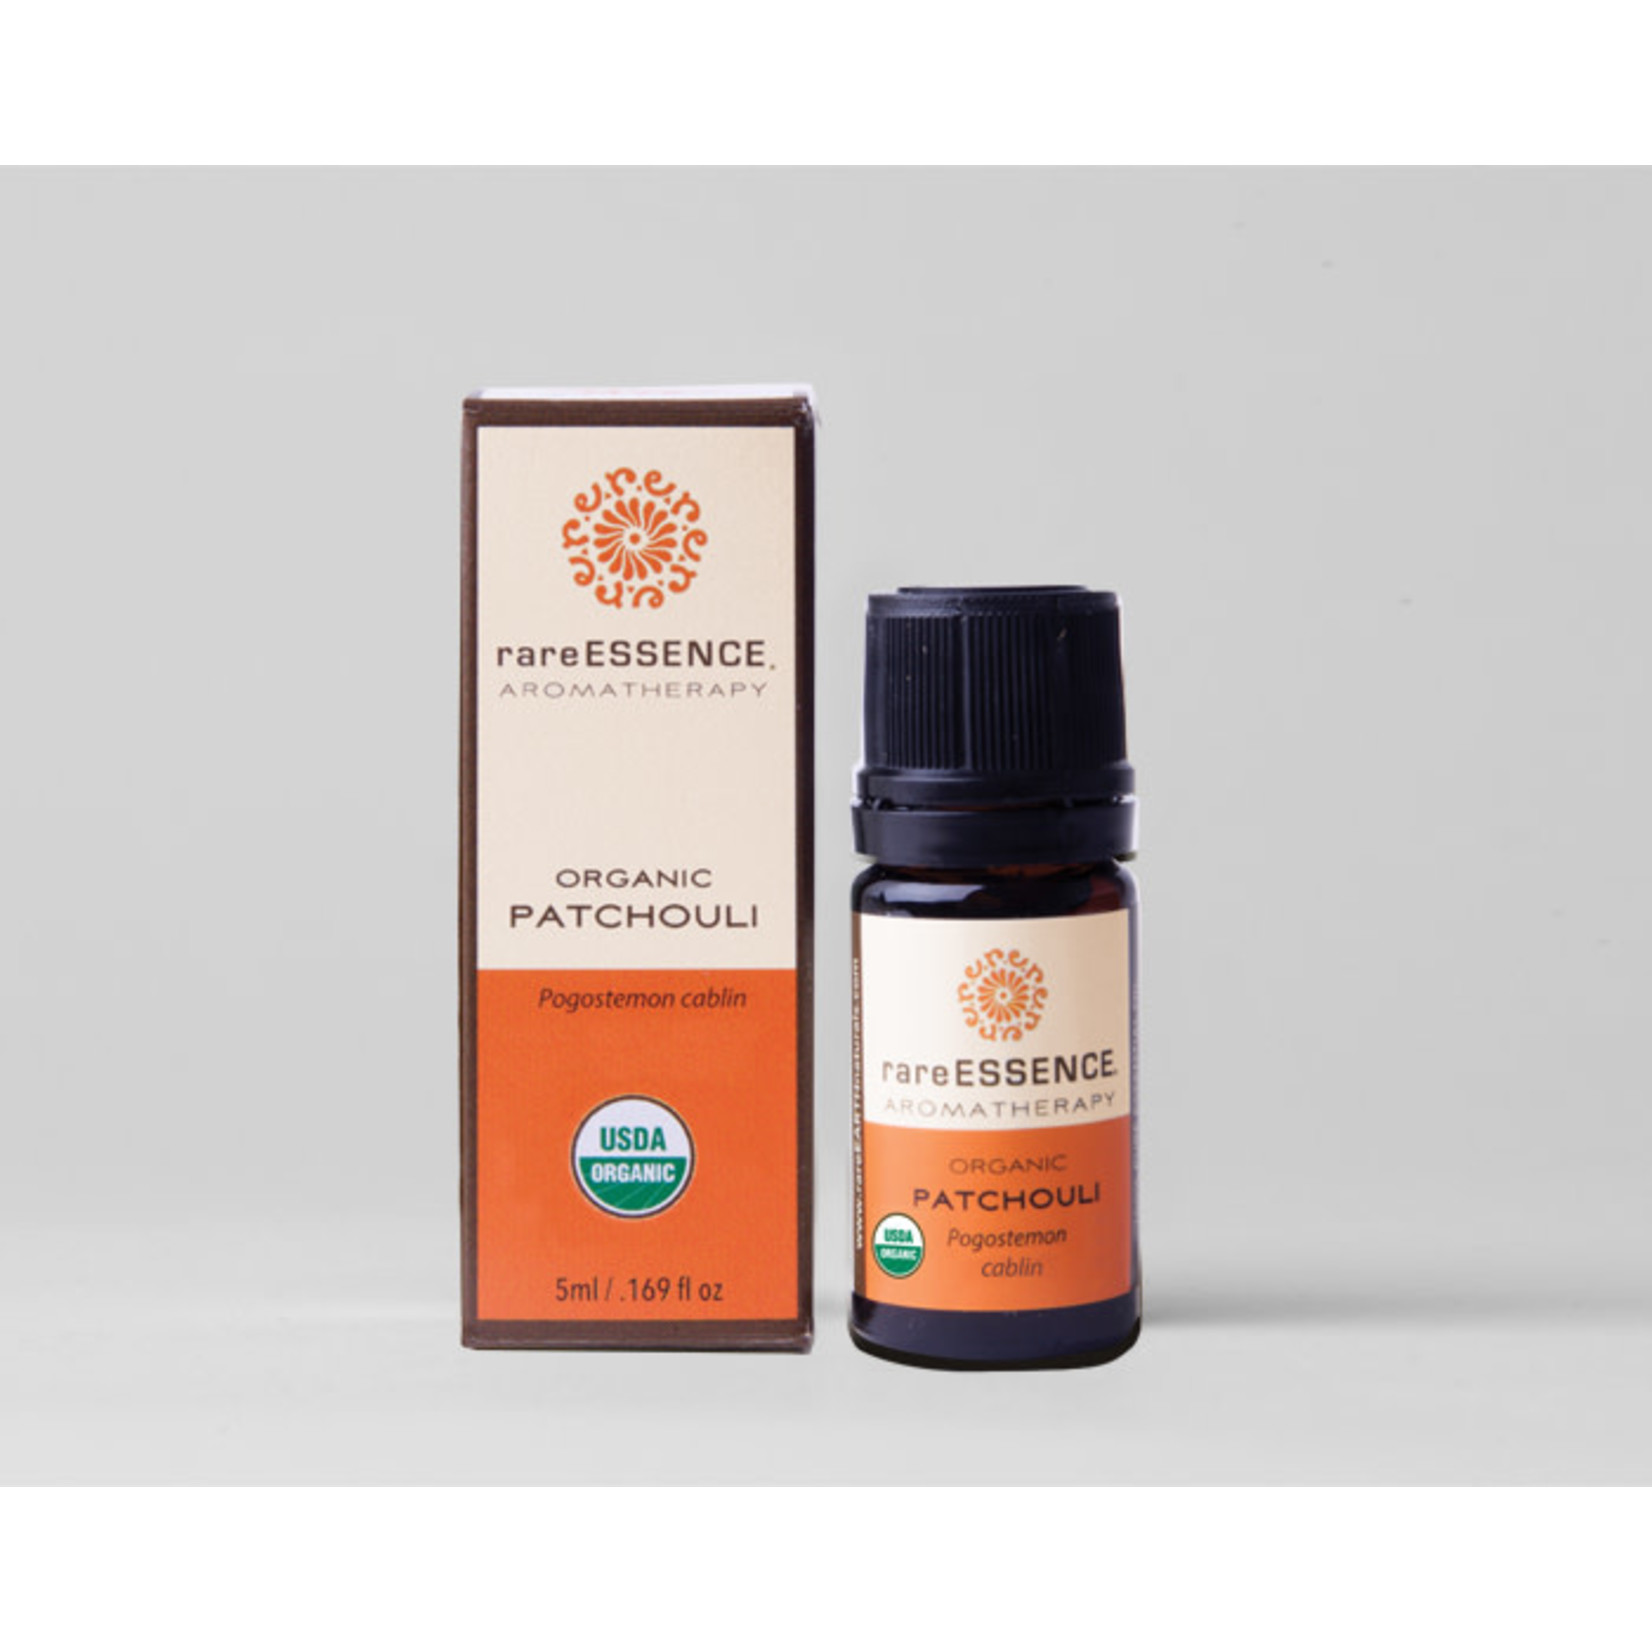 rareESSENCE Aromatherapy Organic Patchouli Essential Oil